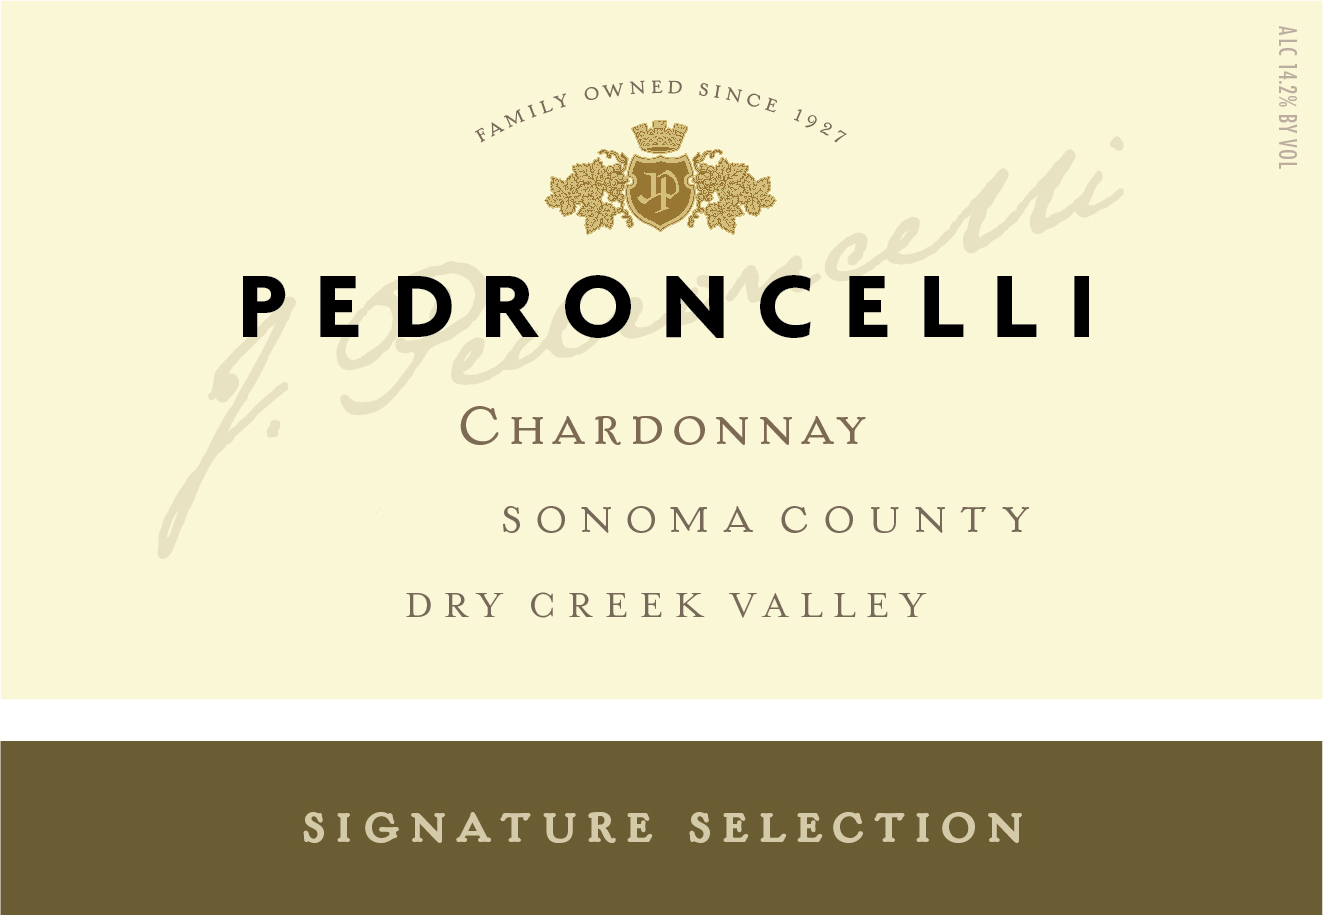 Pedroncelli - Chardonnay - Signature Selection label